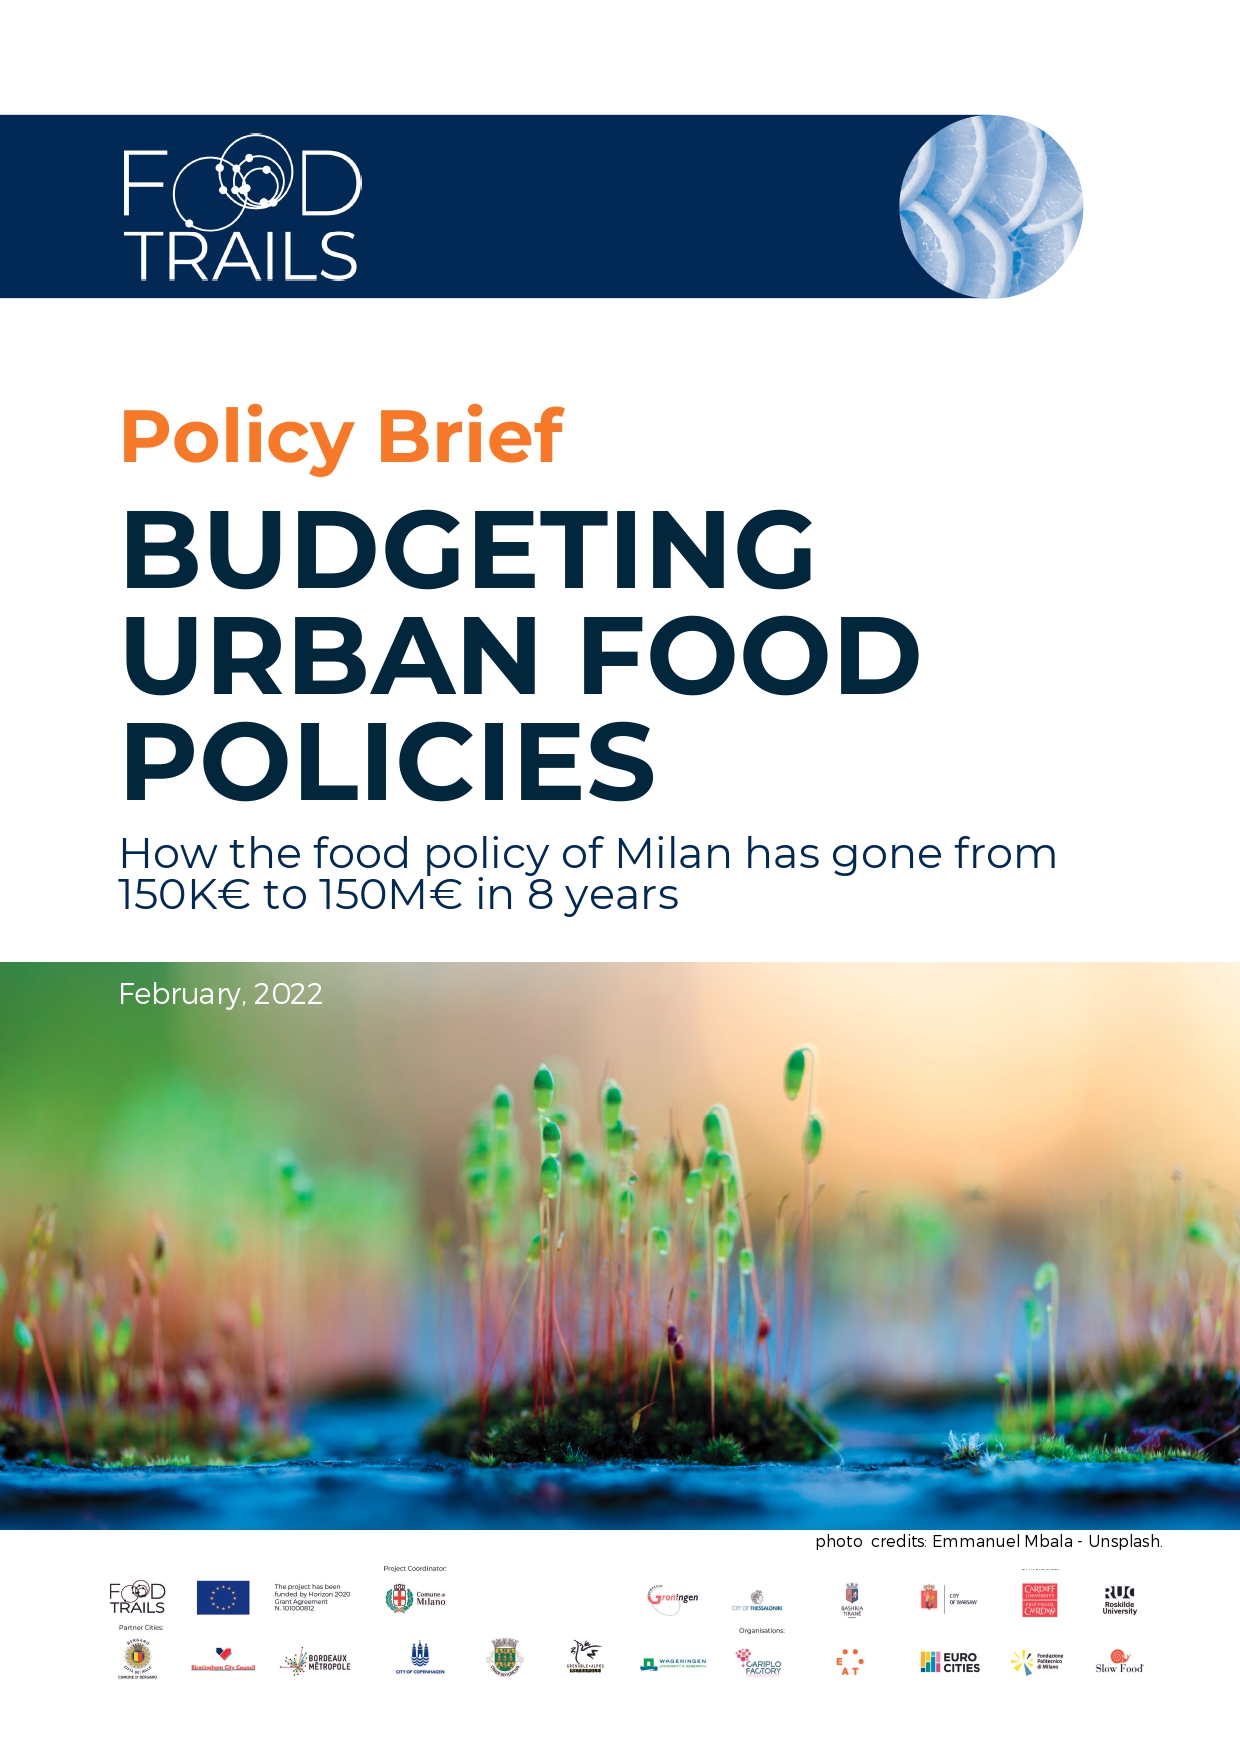 Policy Brief “Budgeting Urban Food Policies” – English version